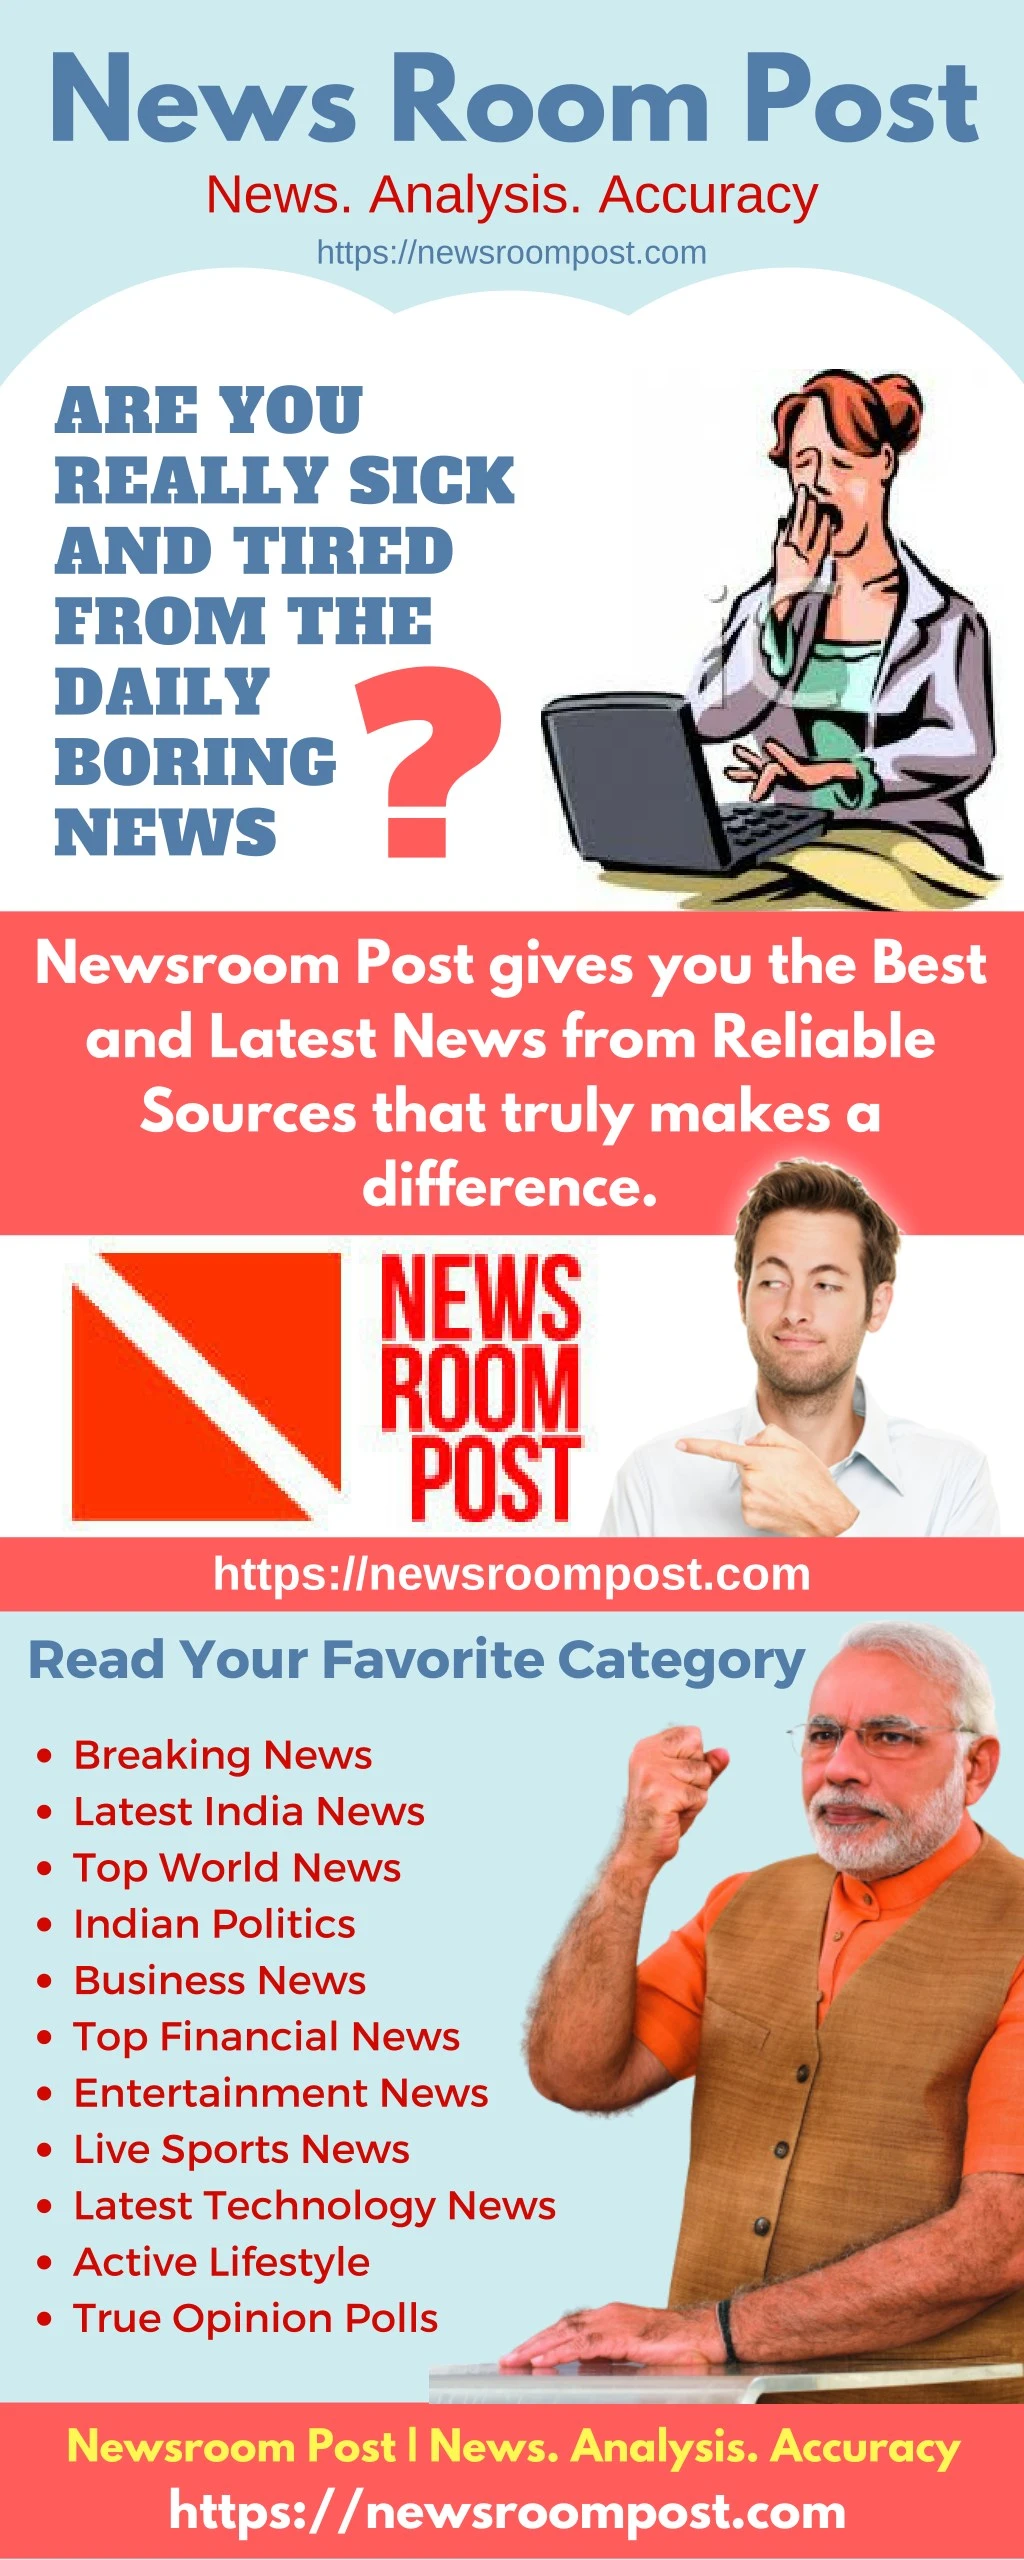 news room post news analysis accuracy https